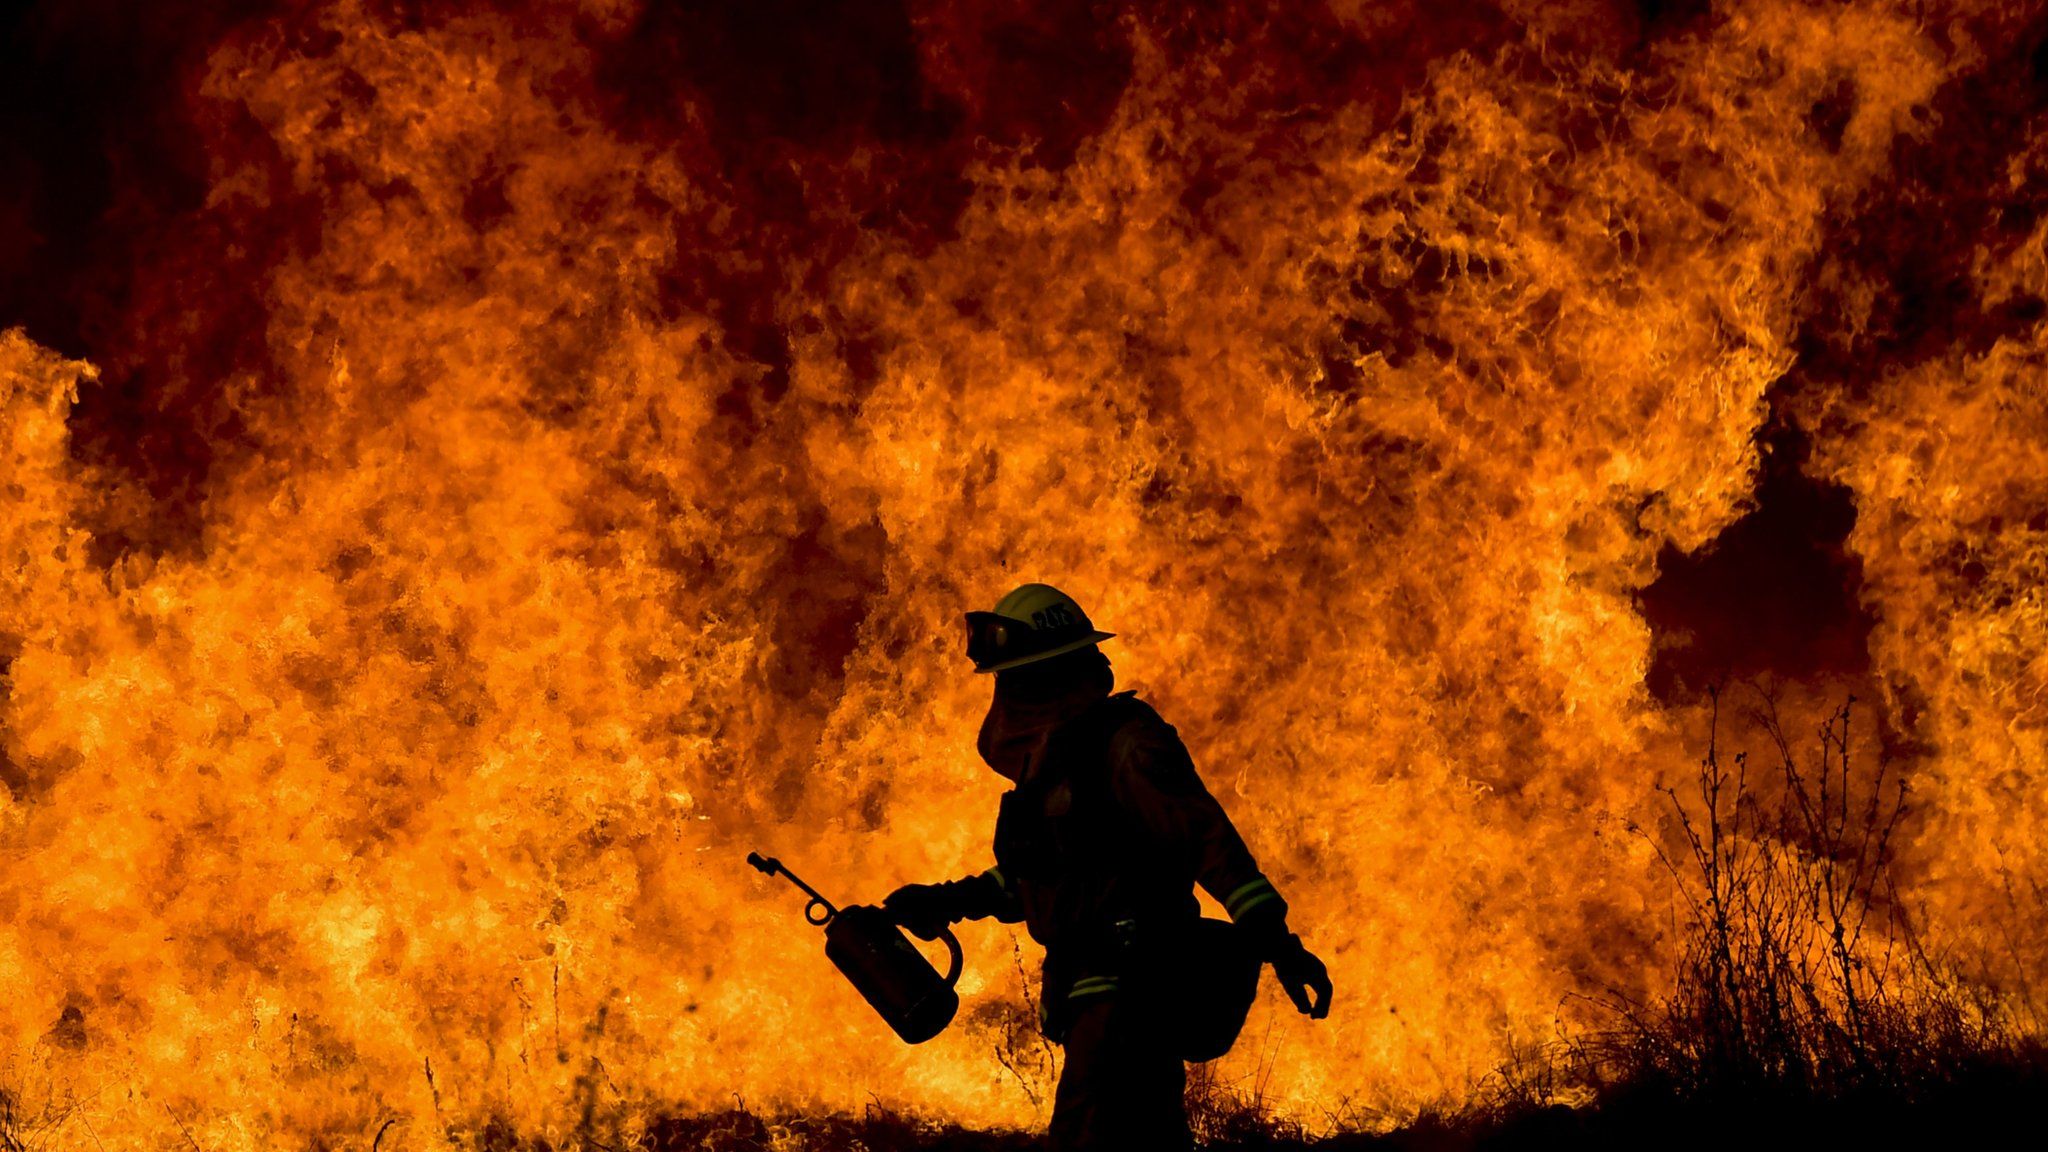 A firefighter battling the flames